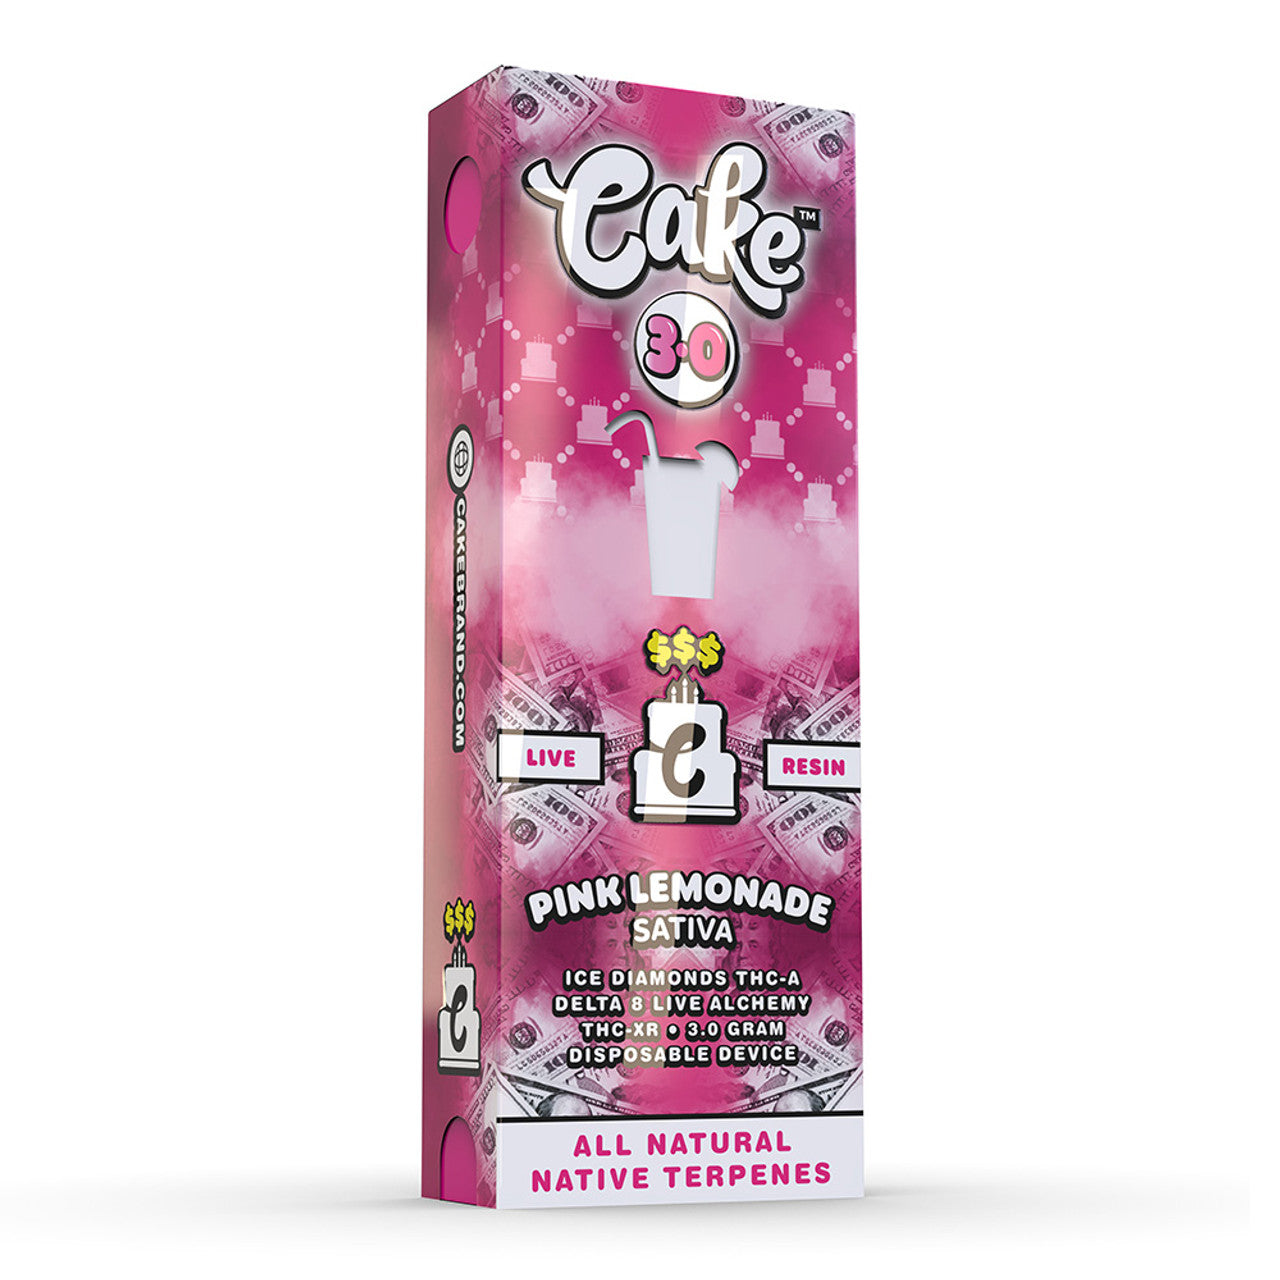 CAKE 3.0 Money Line Live Resin Ice Diamonds THC-A + Delta 8 Live Alchemy + THC-XR Disposable 3G - Pink Lemonade (Sativa)